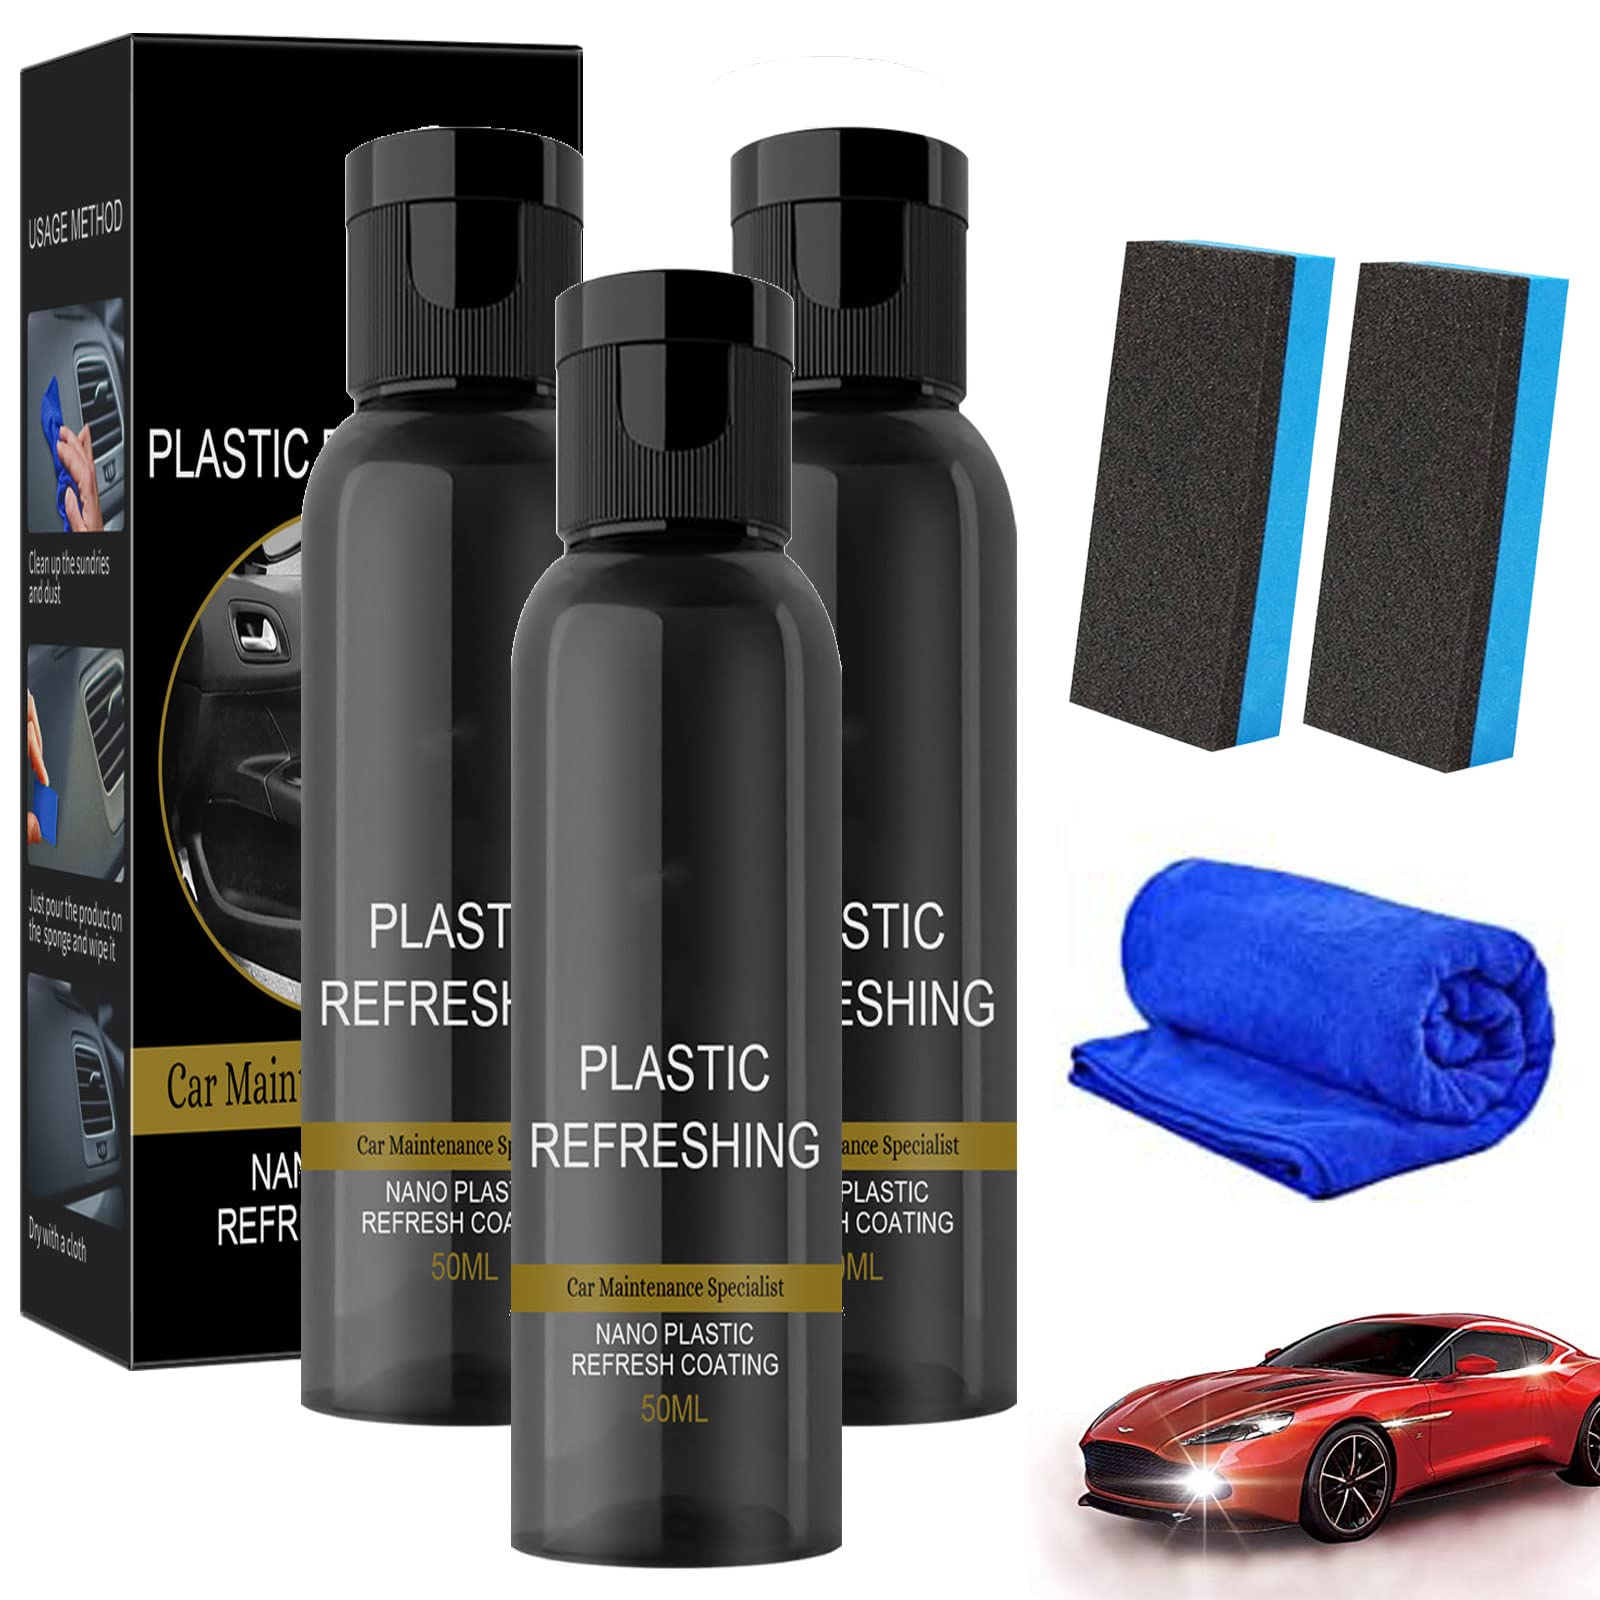 HIDRUO Ultishine Plastic Revitalizing Coating Agent Set, Plastic Refreshing Car Black, Powerful Stain Removal Kit for Car, Nano Plastic Refreshing Coating for Car Quick Restorer (50ML, 3PCS) von HIDRUO